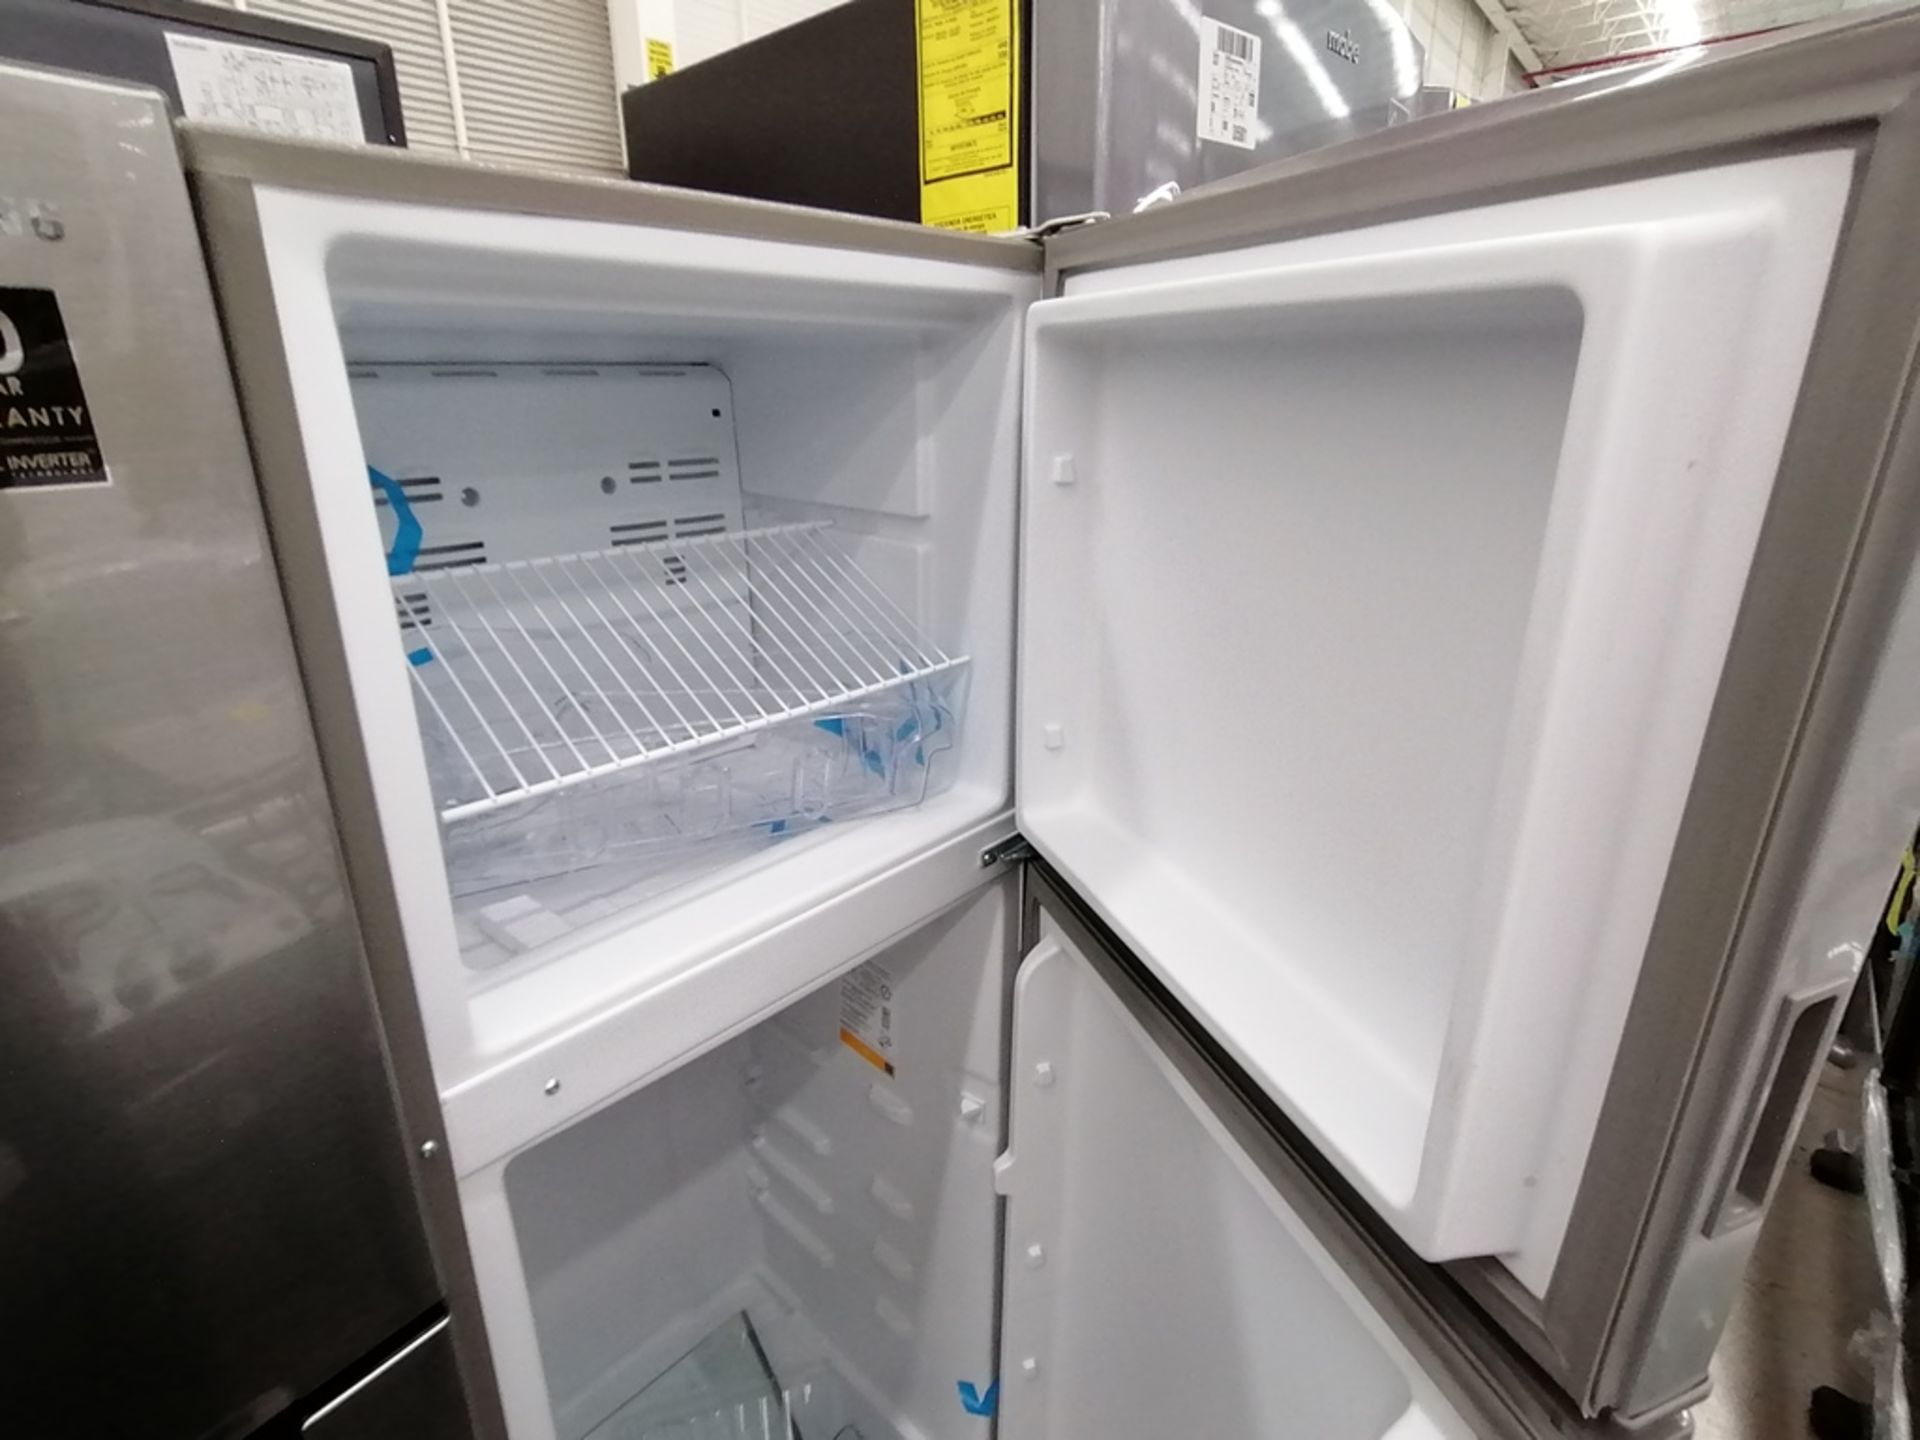 Lote de 2 refrigeradores incluye: 1 Refrigerador, Marca Samsung, Modelo RT29K500JS8, Serie 0AZS4BAR - Image 7 of 16